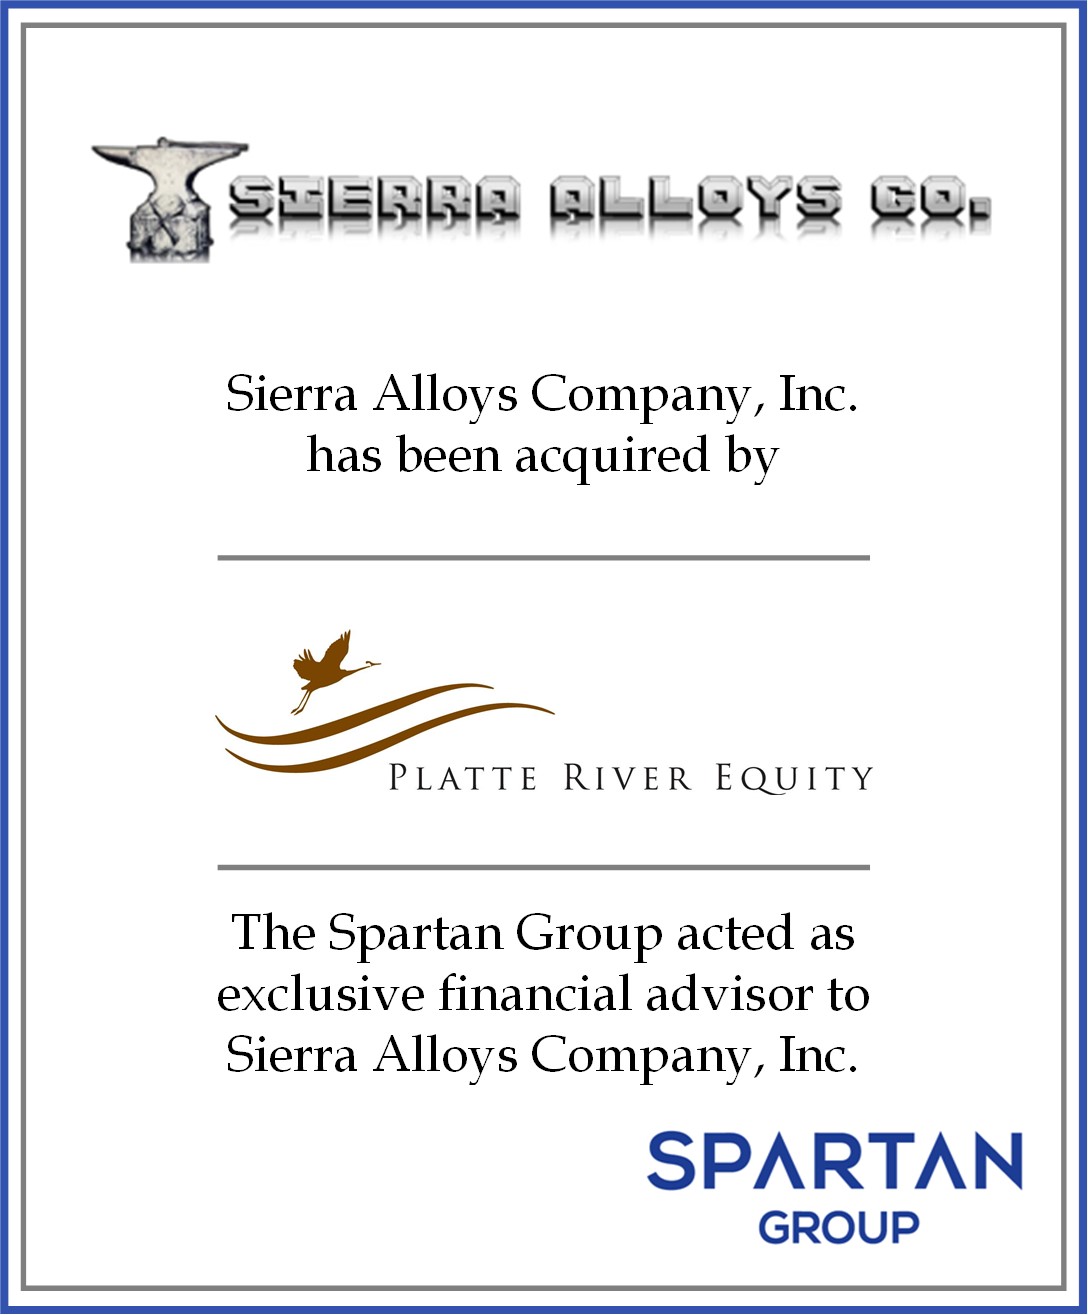 Sierra Alloys Company